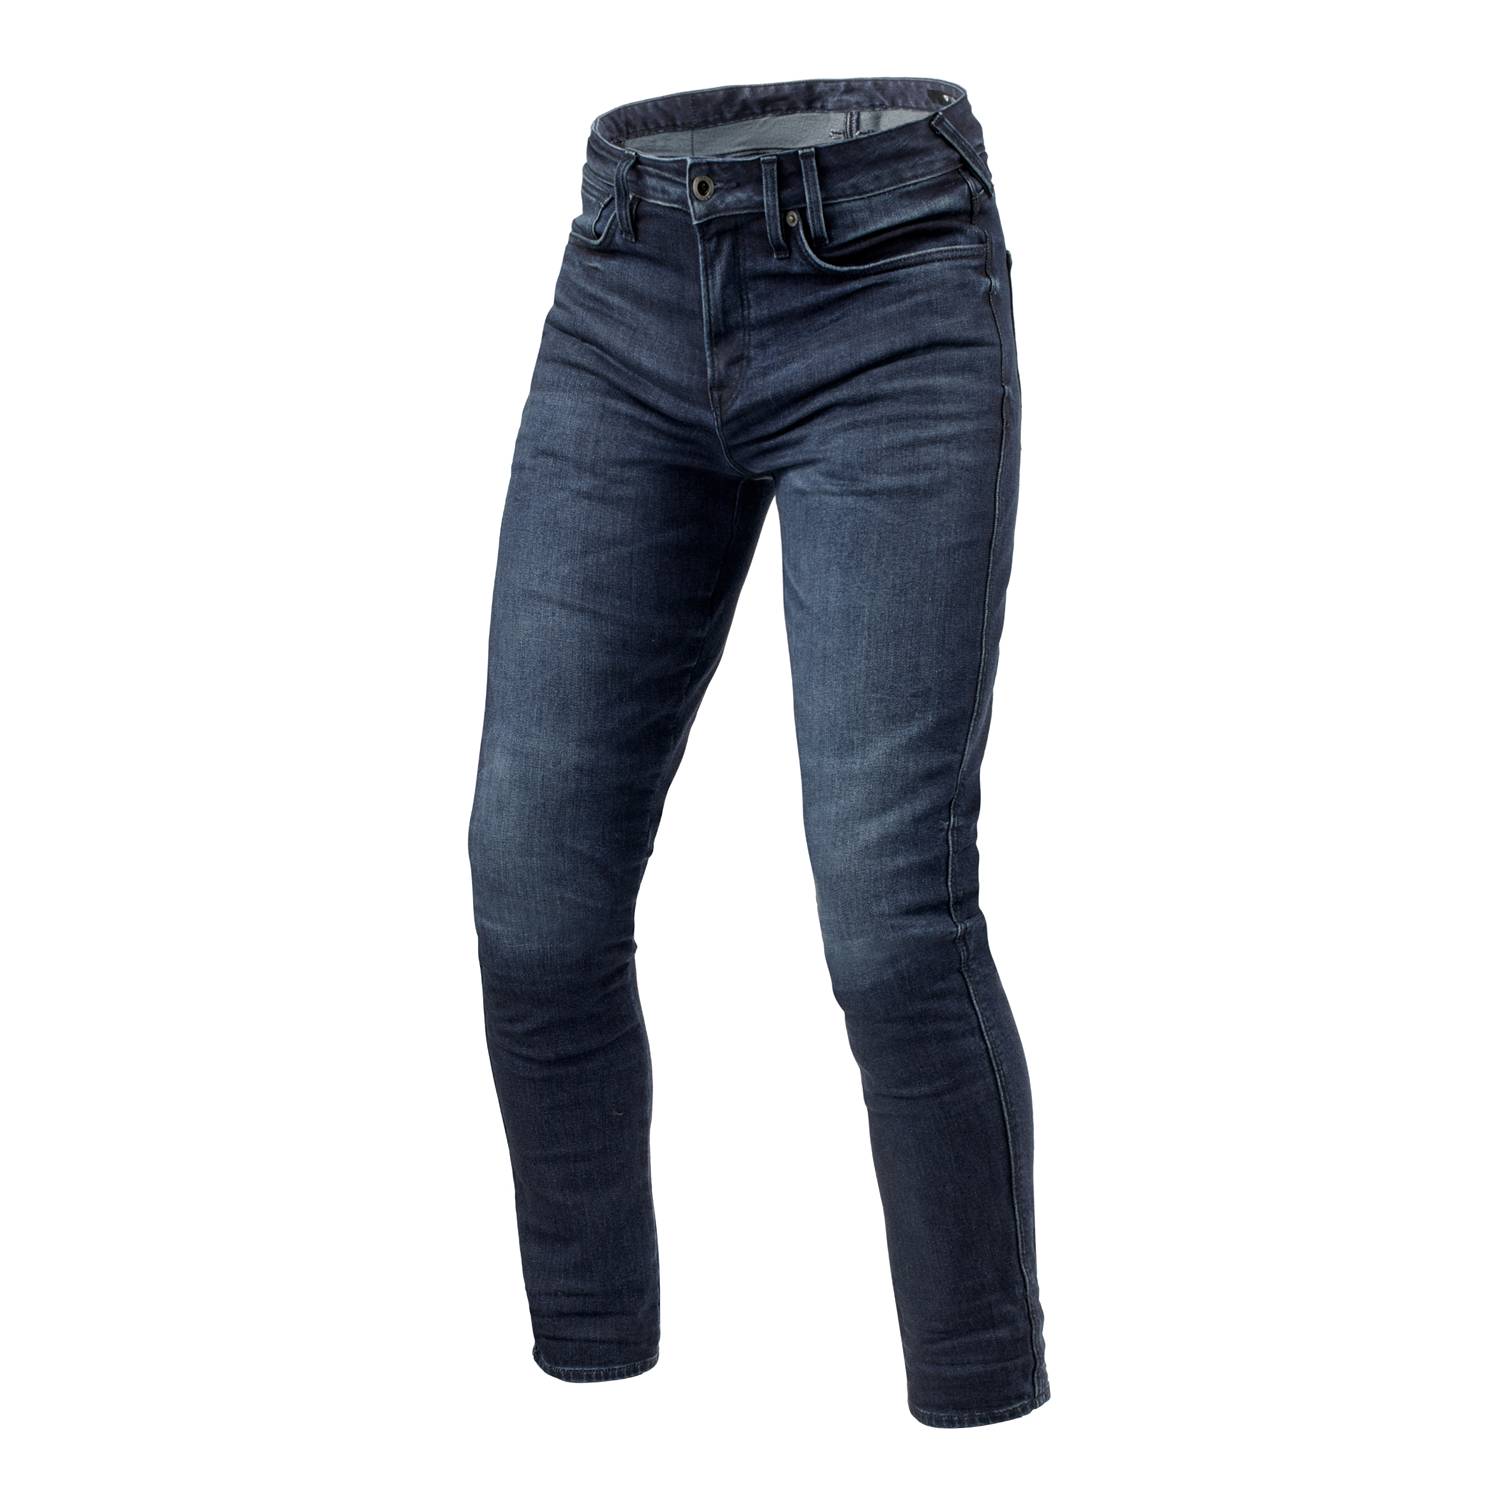 Image of REV'IT! Jeans Carlin SK Dark Blue Used L36 Motorcycle Jeans Talla L36/W30